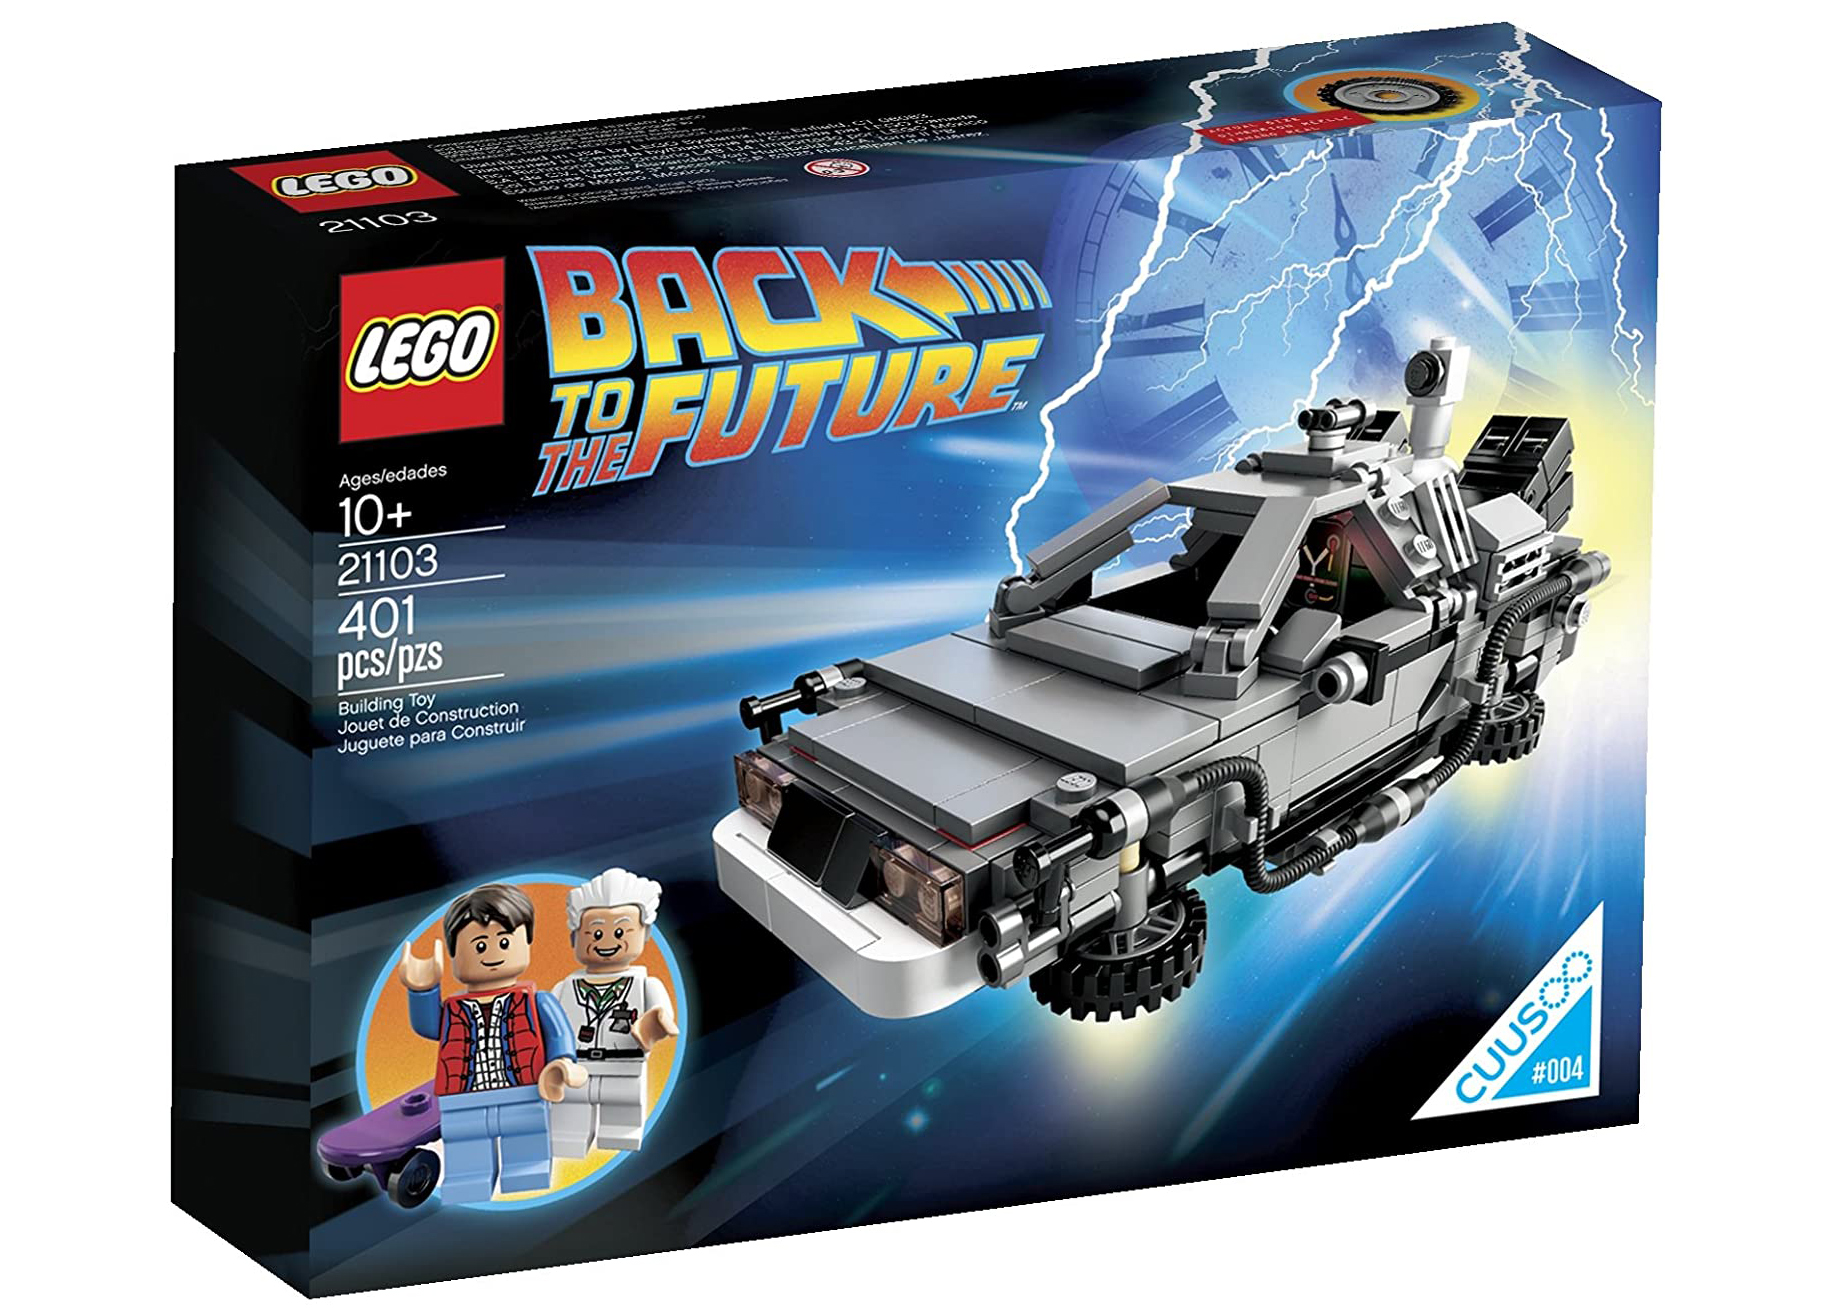 LEGO Back To The Future The DeLorean Time Machine Set 21103